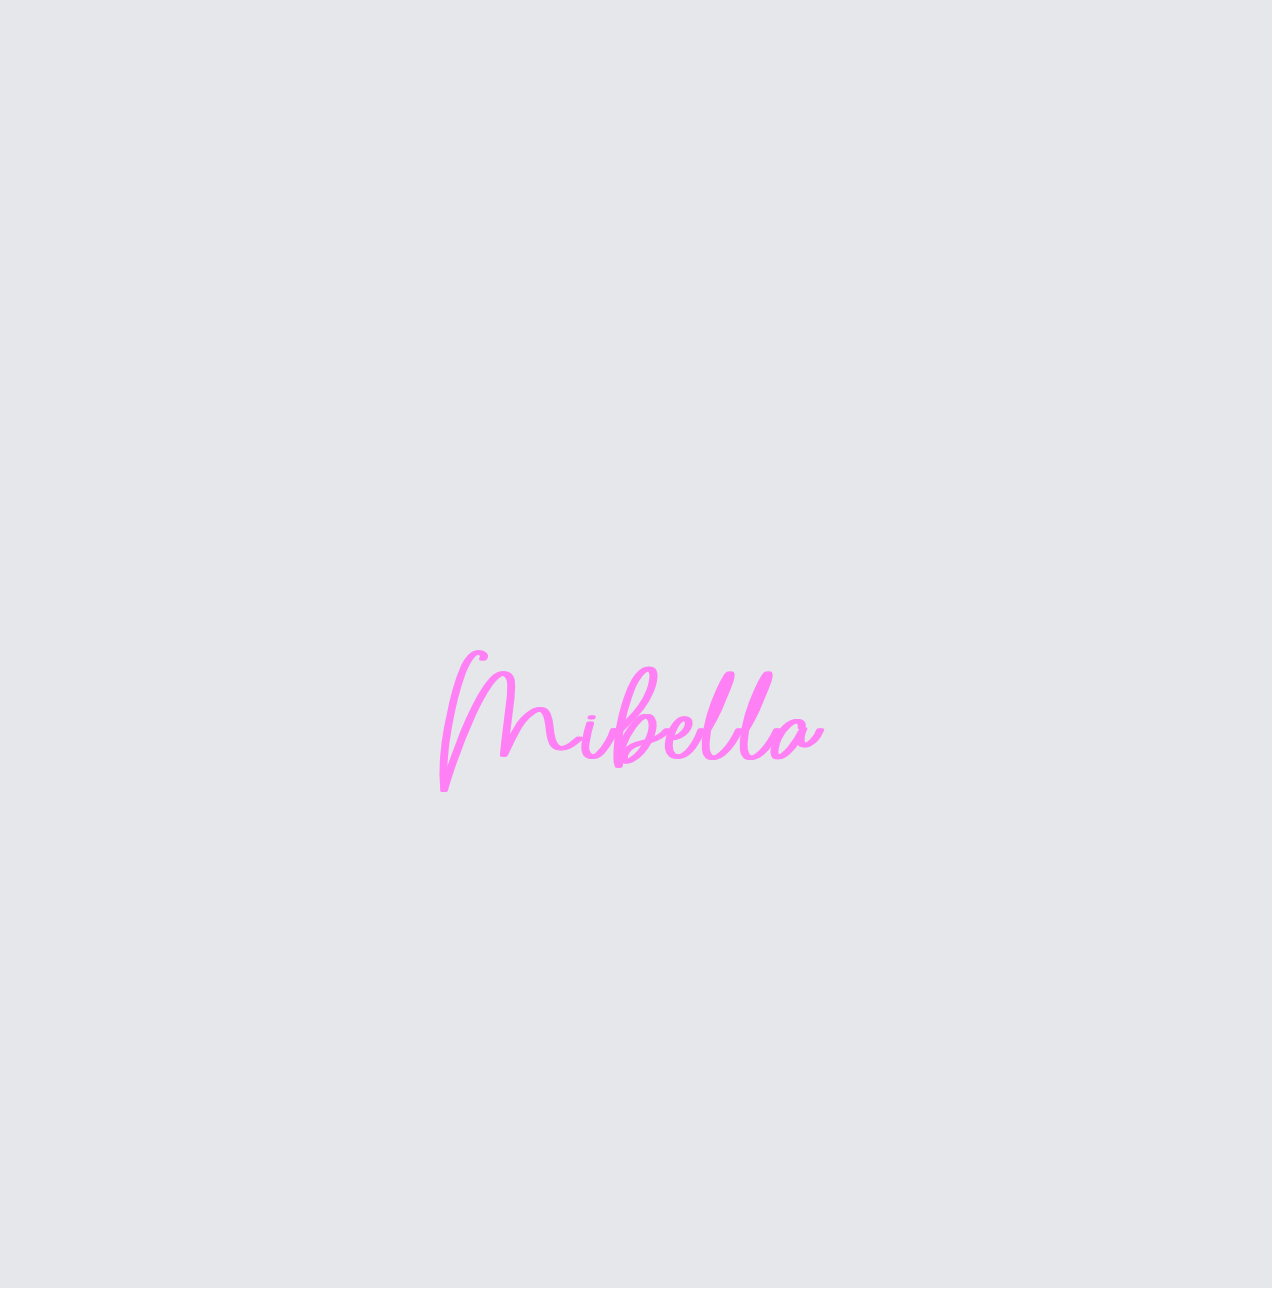 Custom neon sign - Mibella